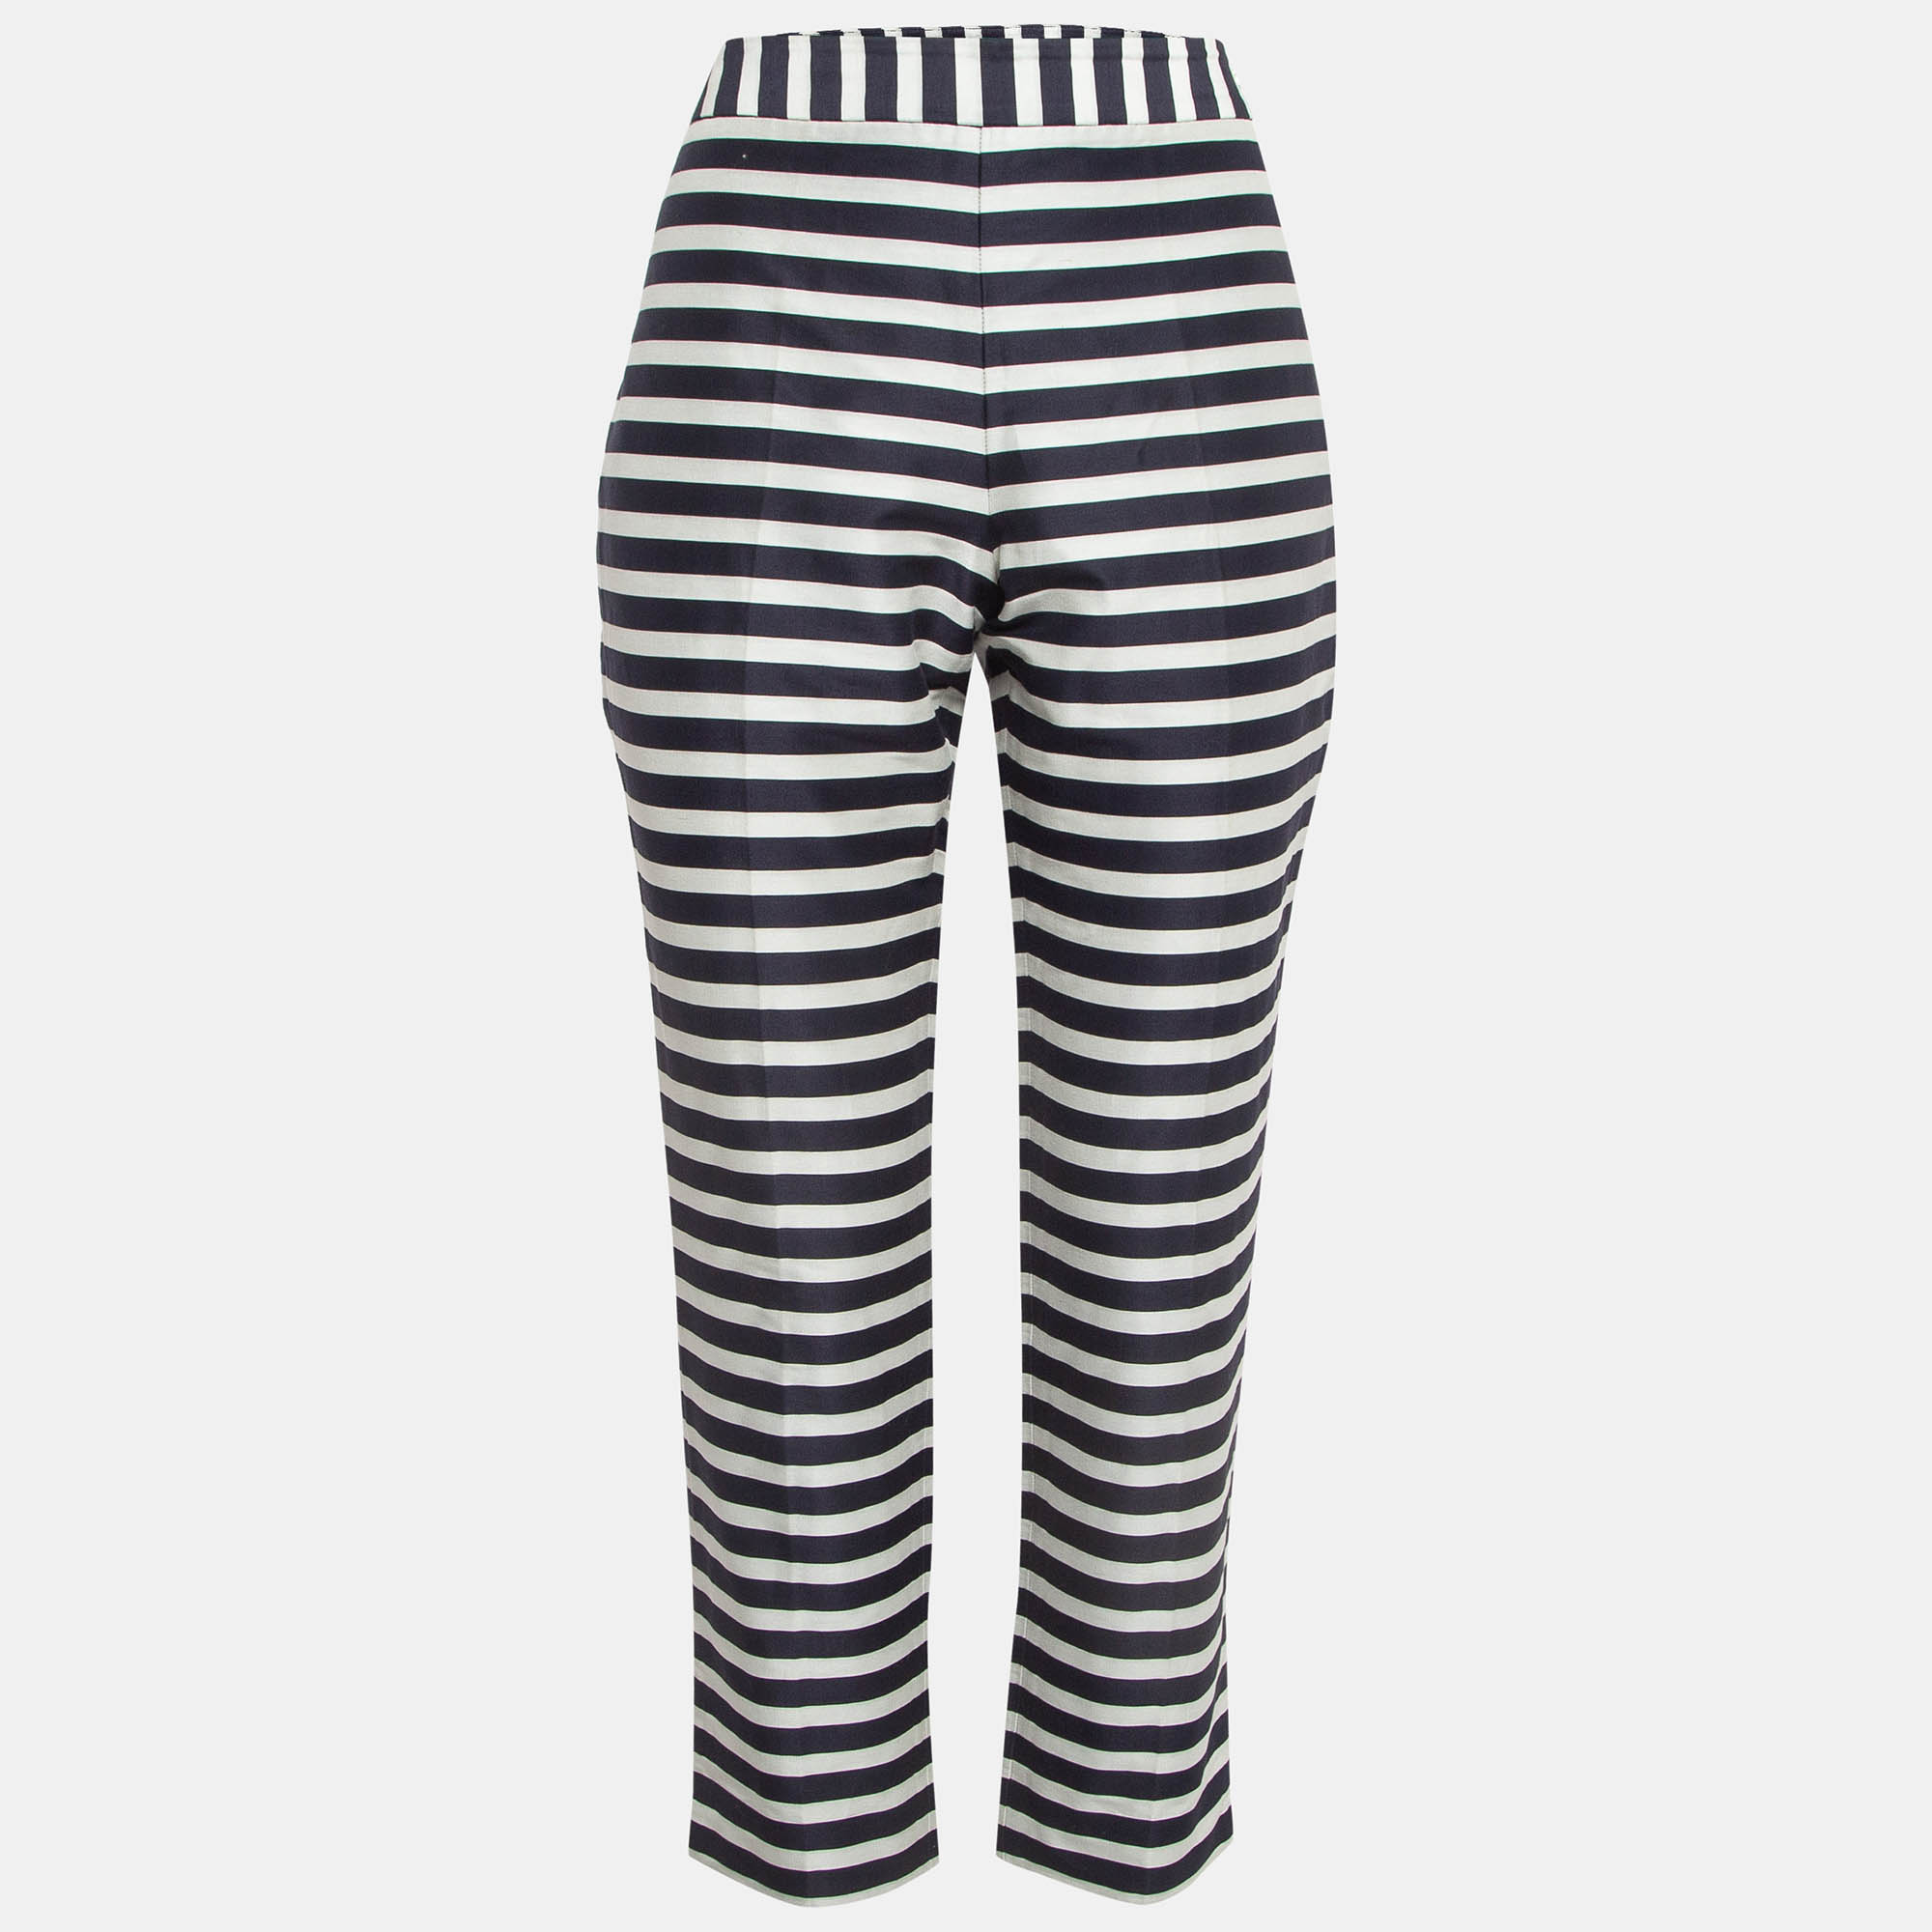 Carolina herrera navy & white striped silk blend pants m